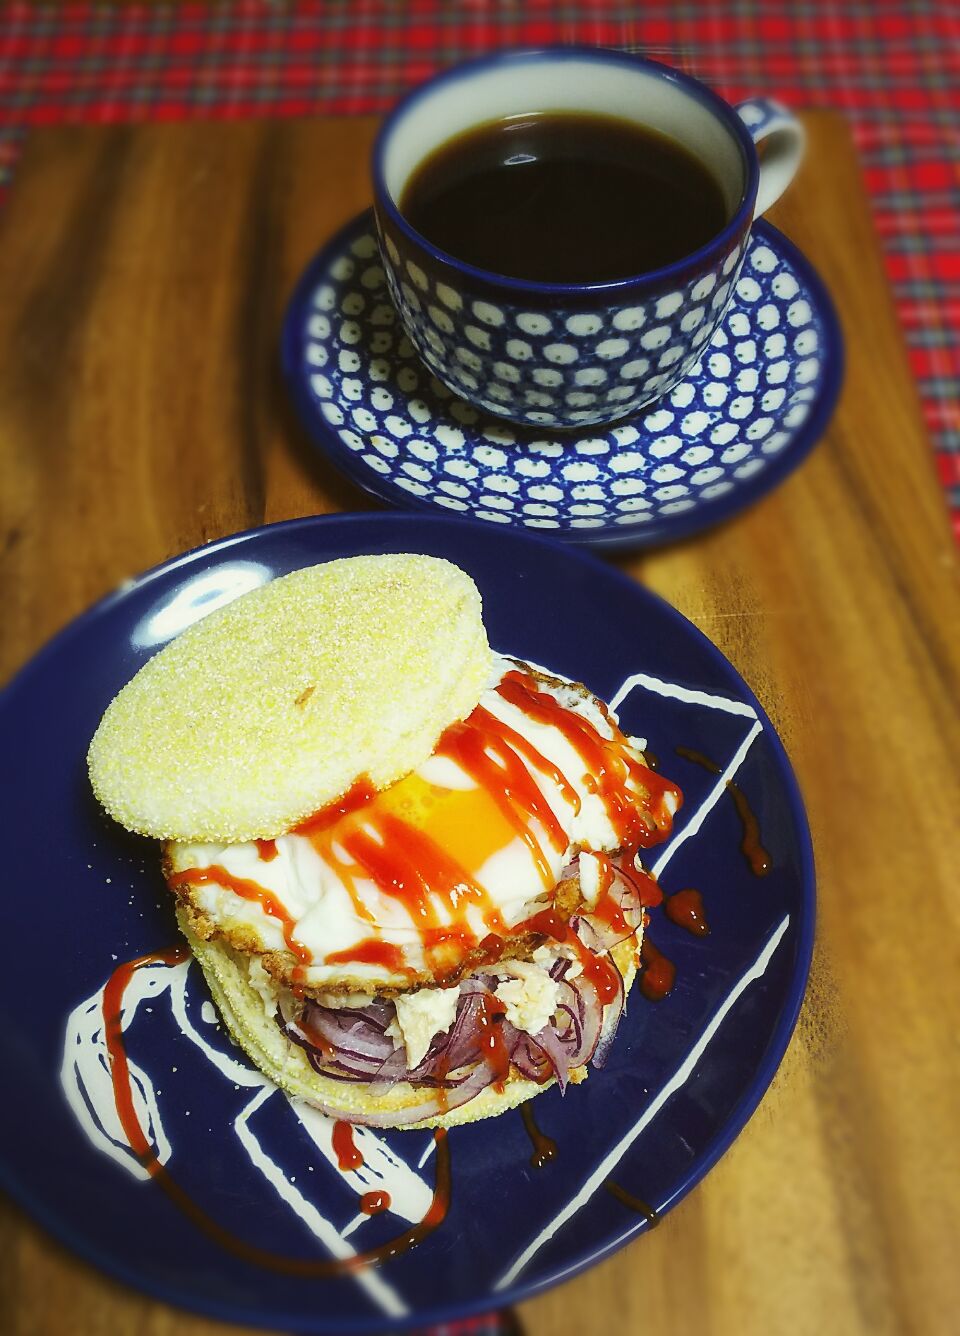 English muffin open sandwich 
Morning ぱん～?